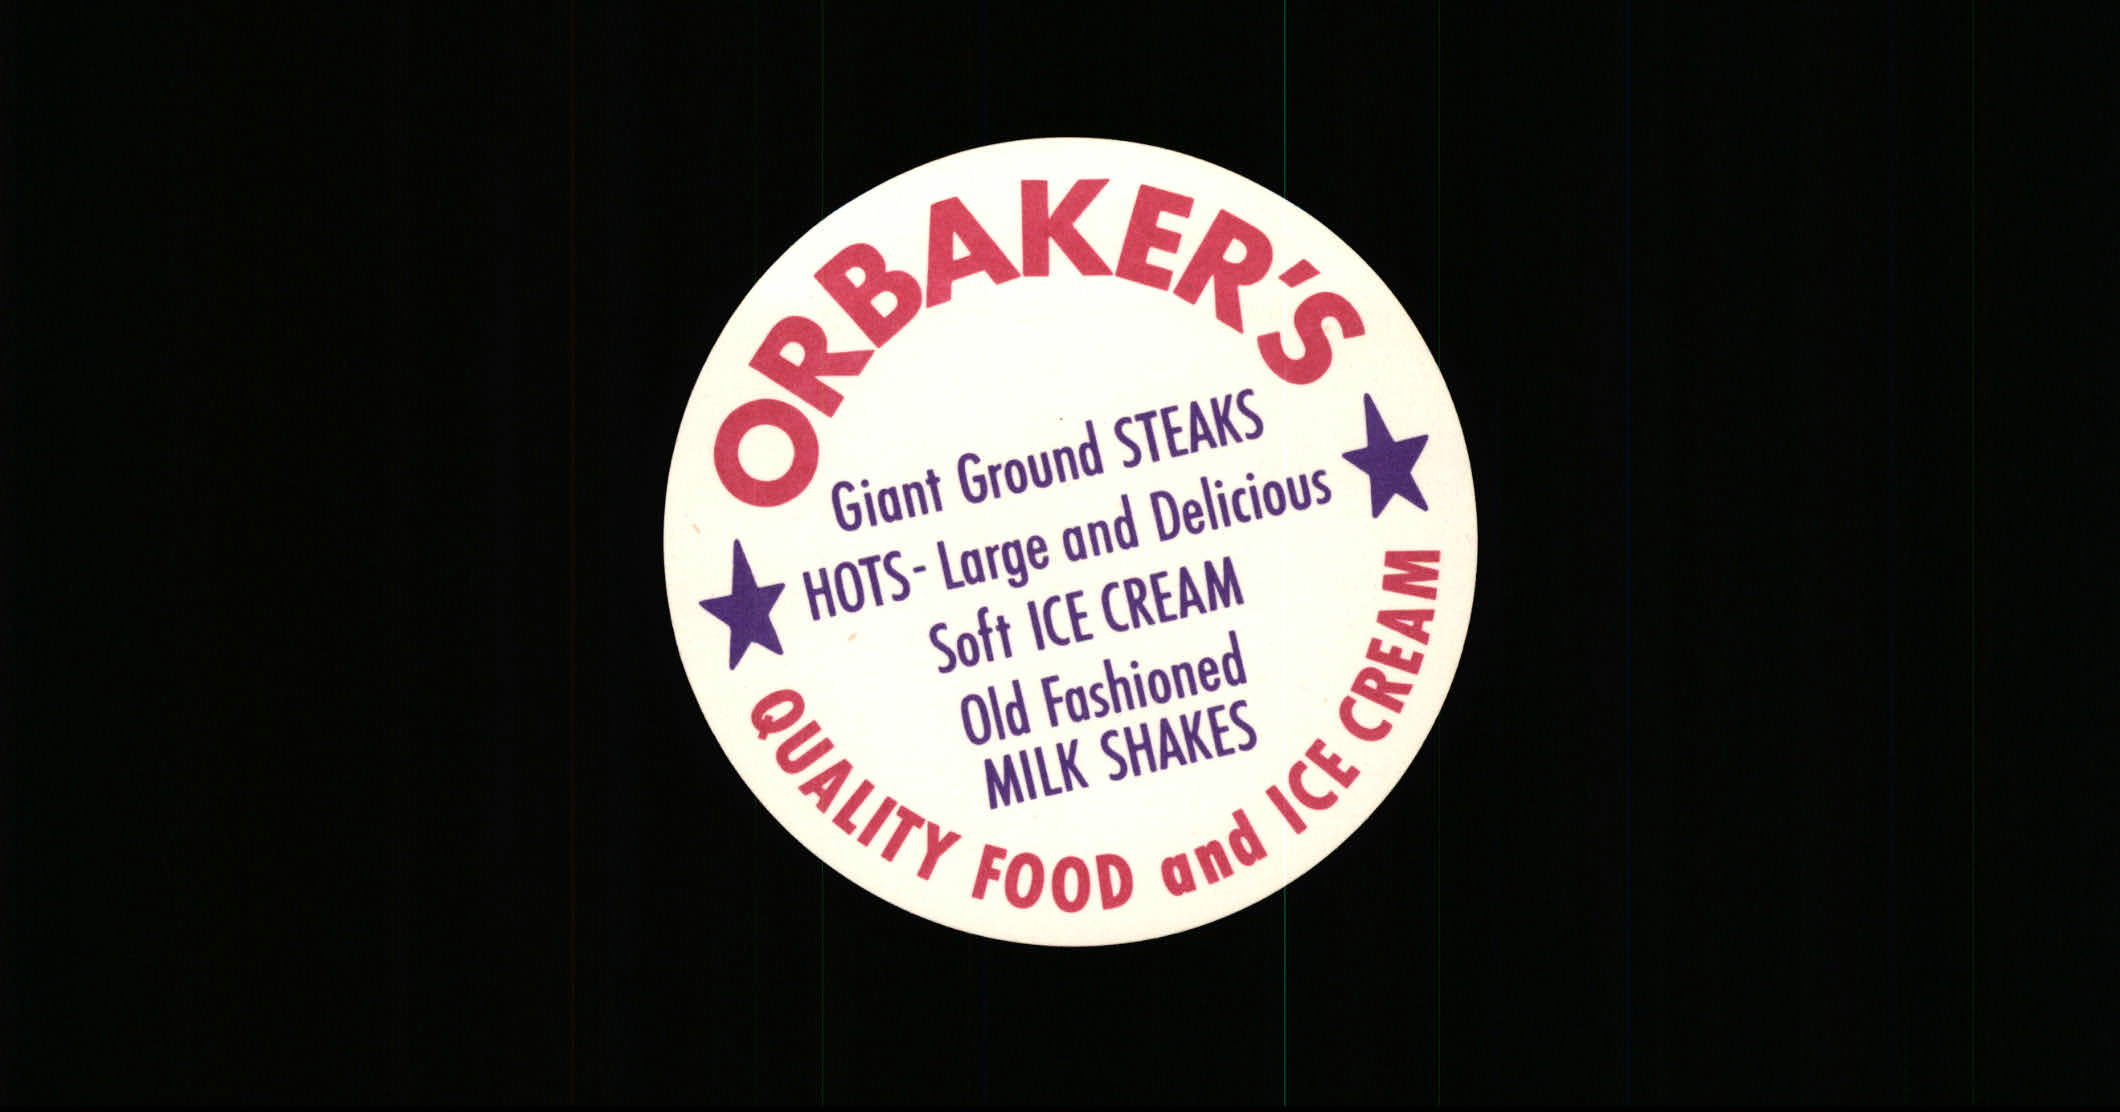 1976 Orbakers Discs #46 Tony Perez back image